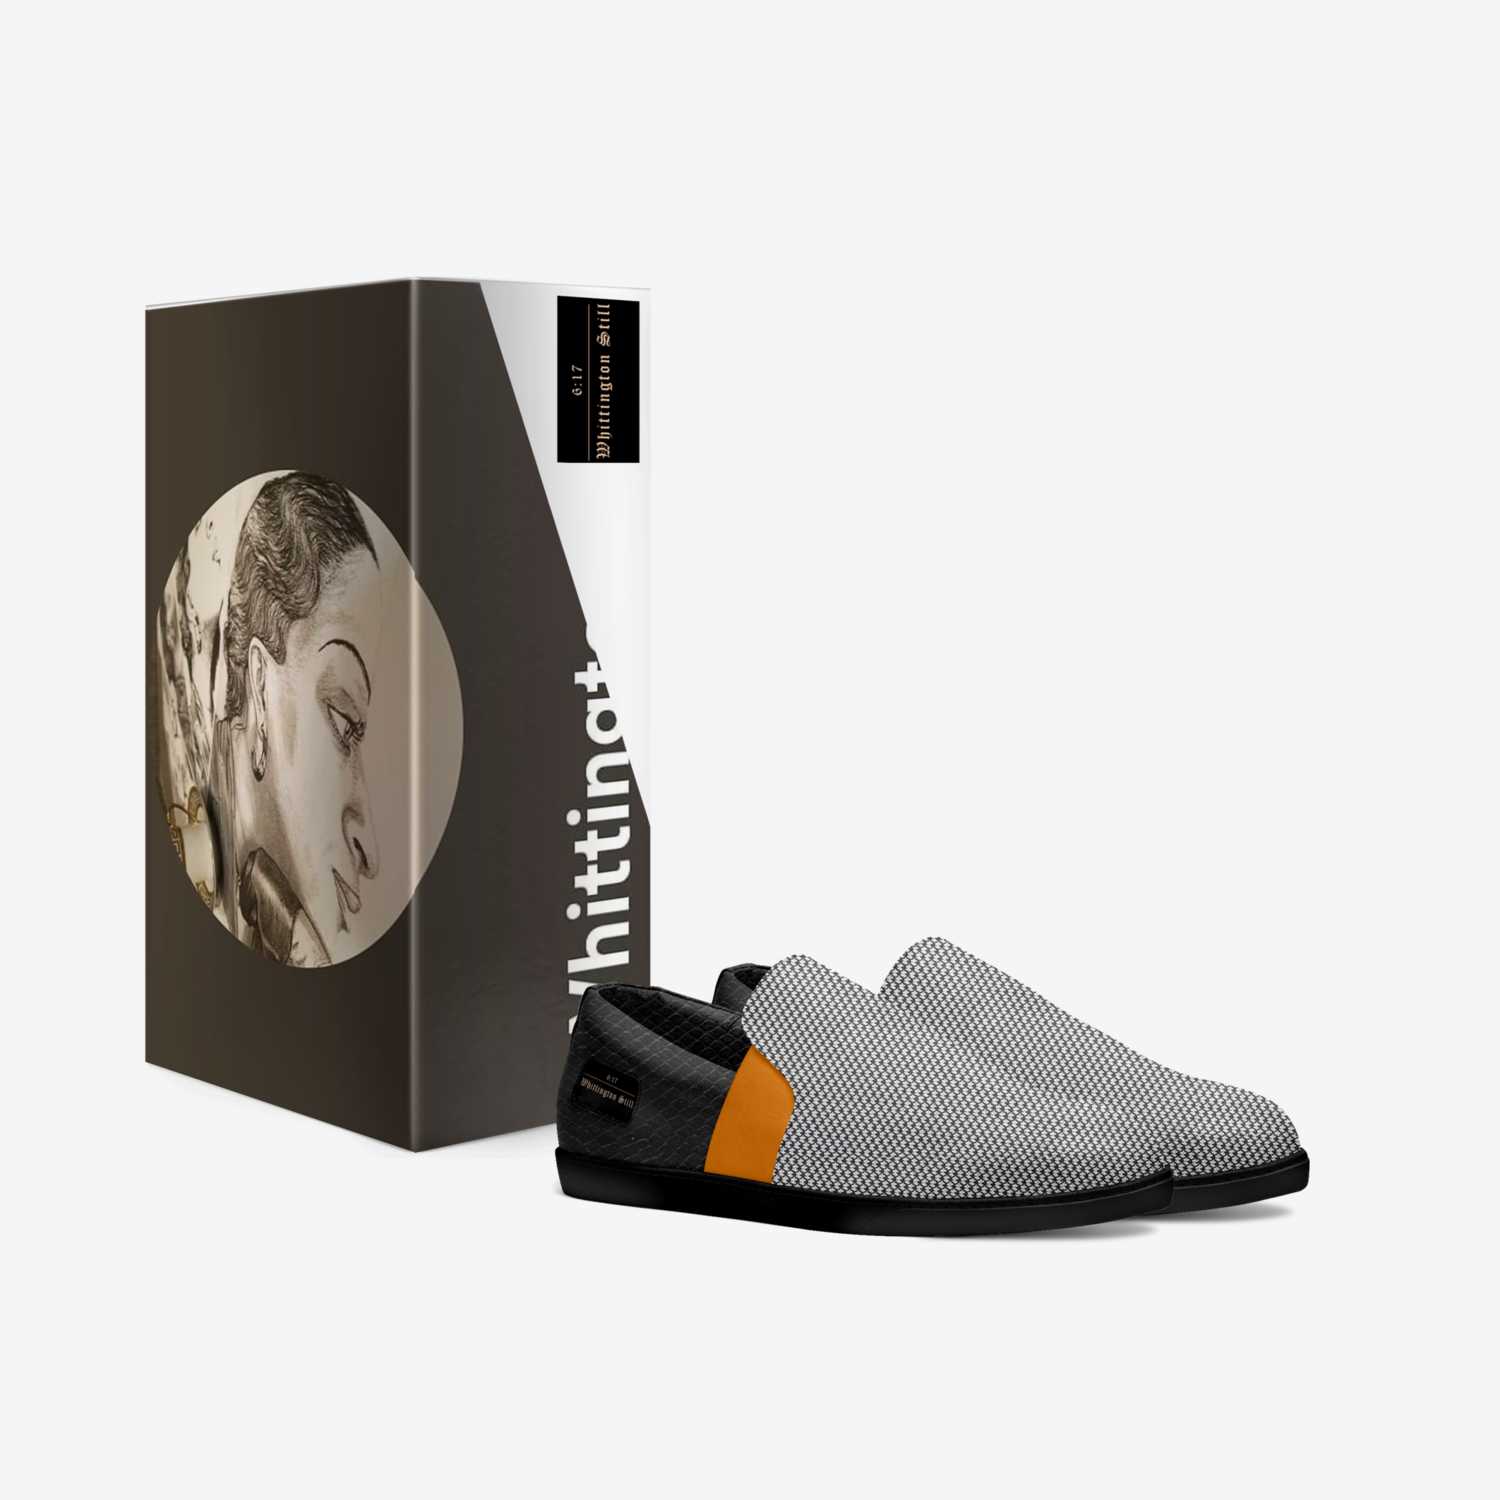 Whittington Still custom made in Italy shoes by Whittington Still | Box view